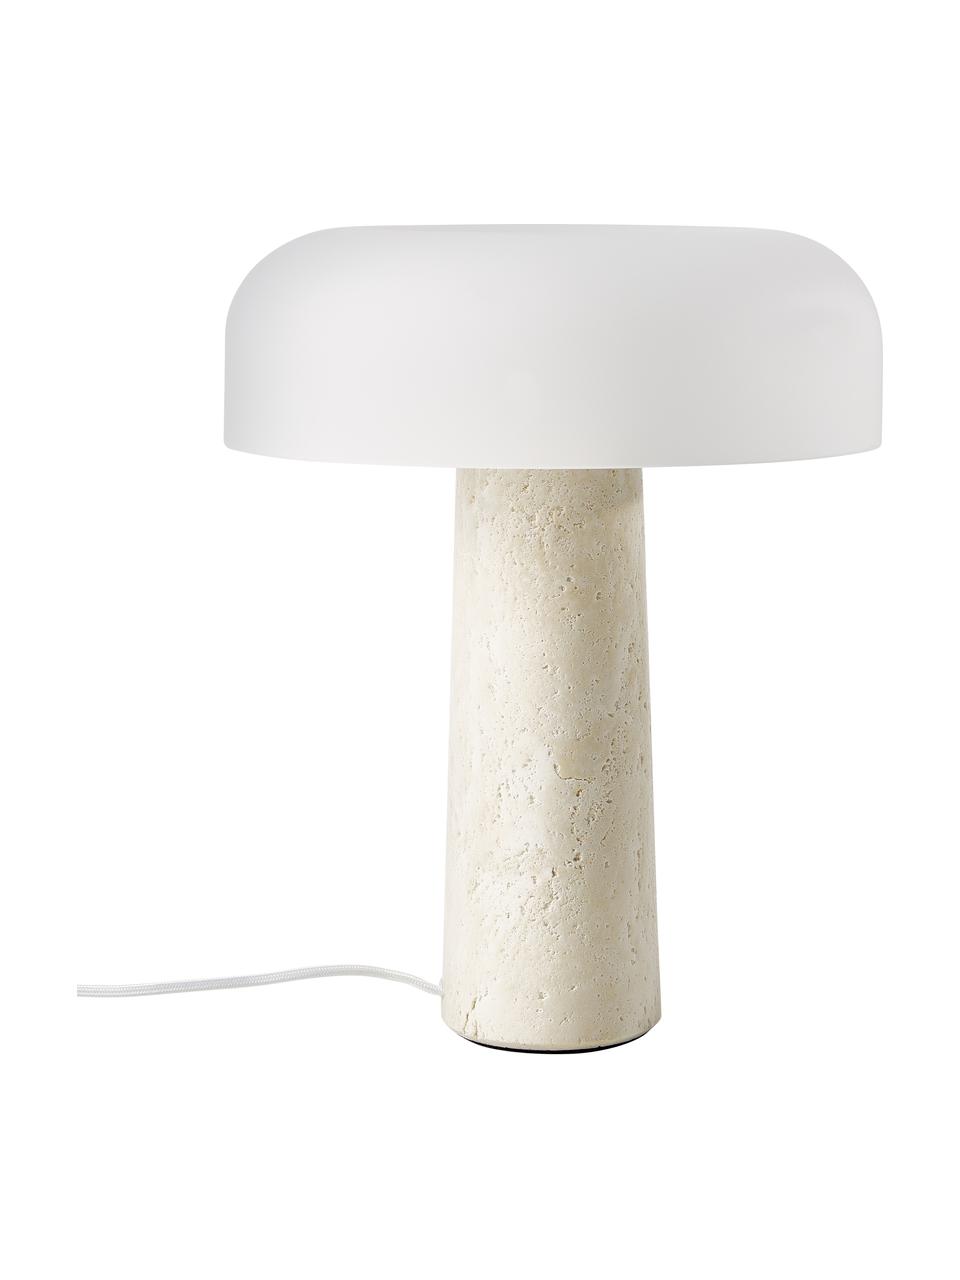 Lampe à poser avec pied en travertin Carla, Beige, aspect travertin, blanc, Ø 32 x haut. 39 cm